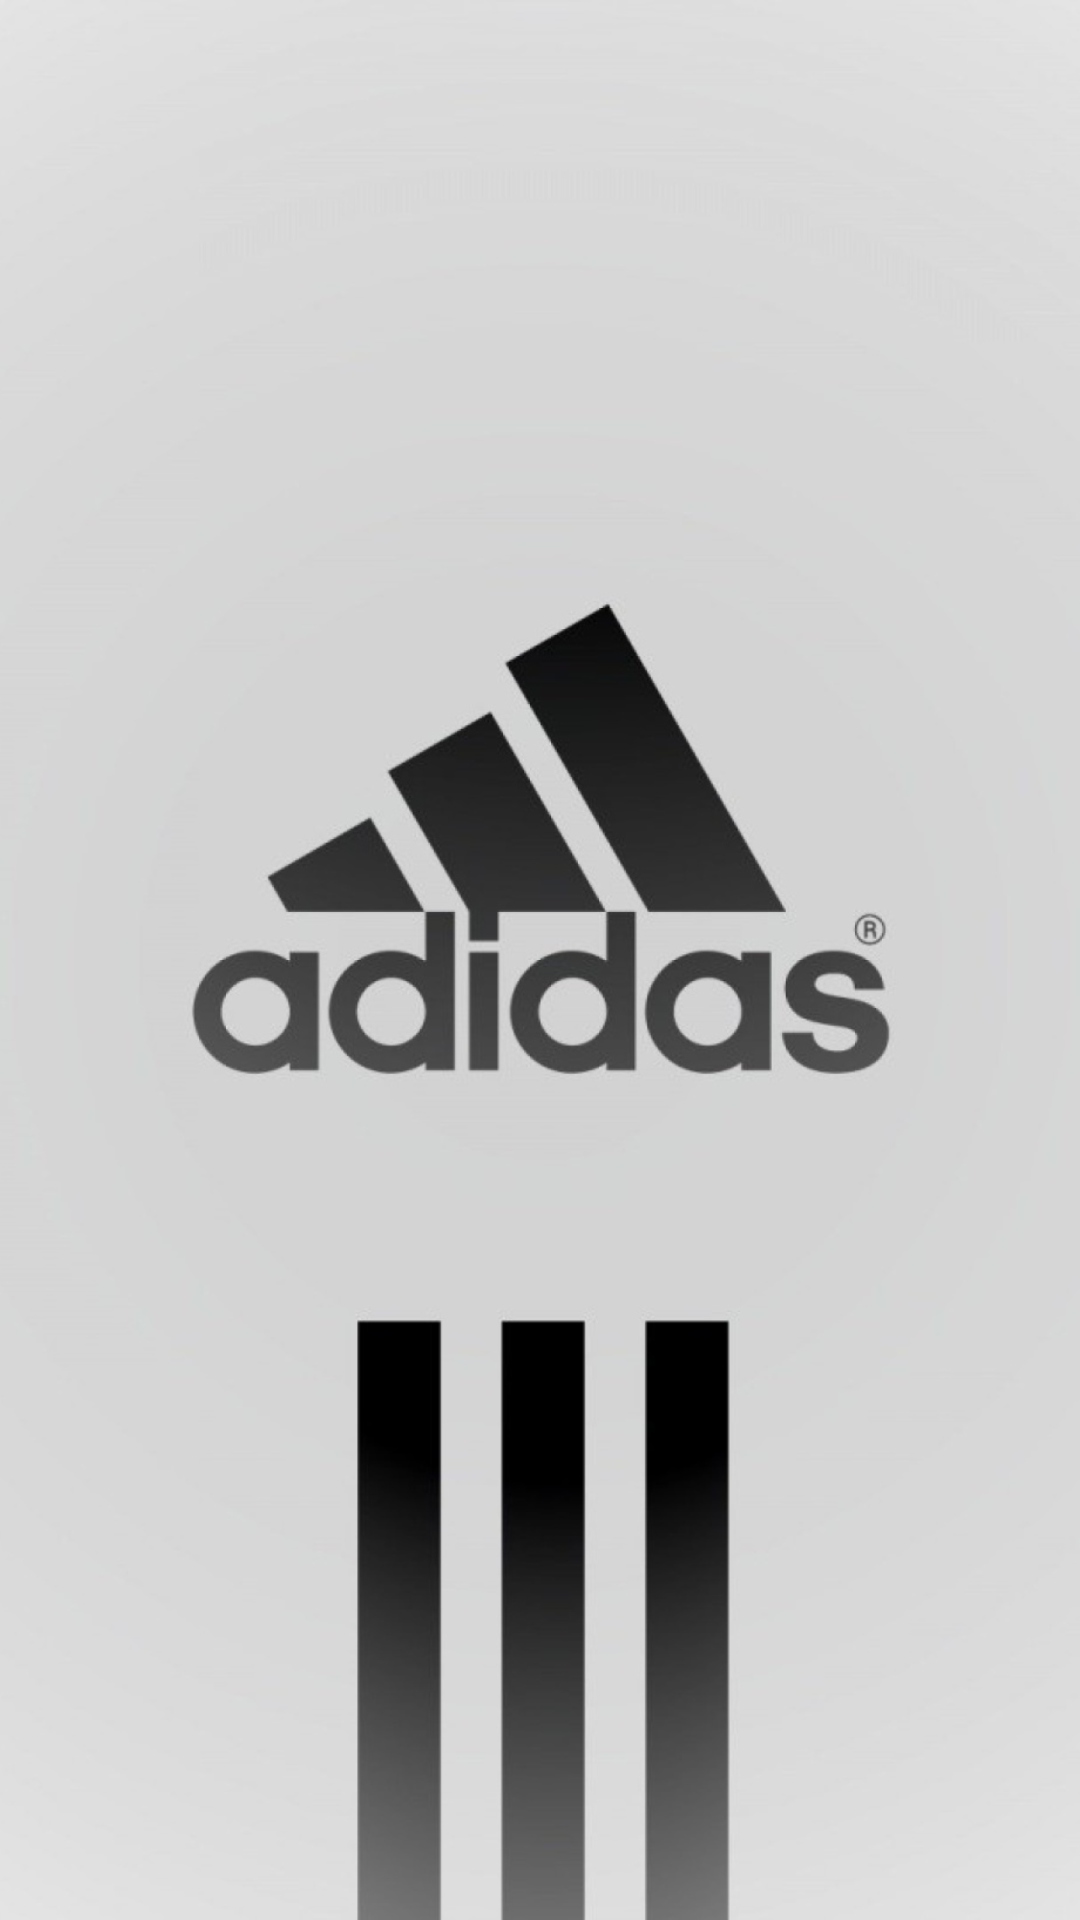 Adidas Iphone Hd Wallpaper - Pixelstalk.Net